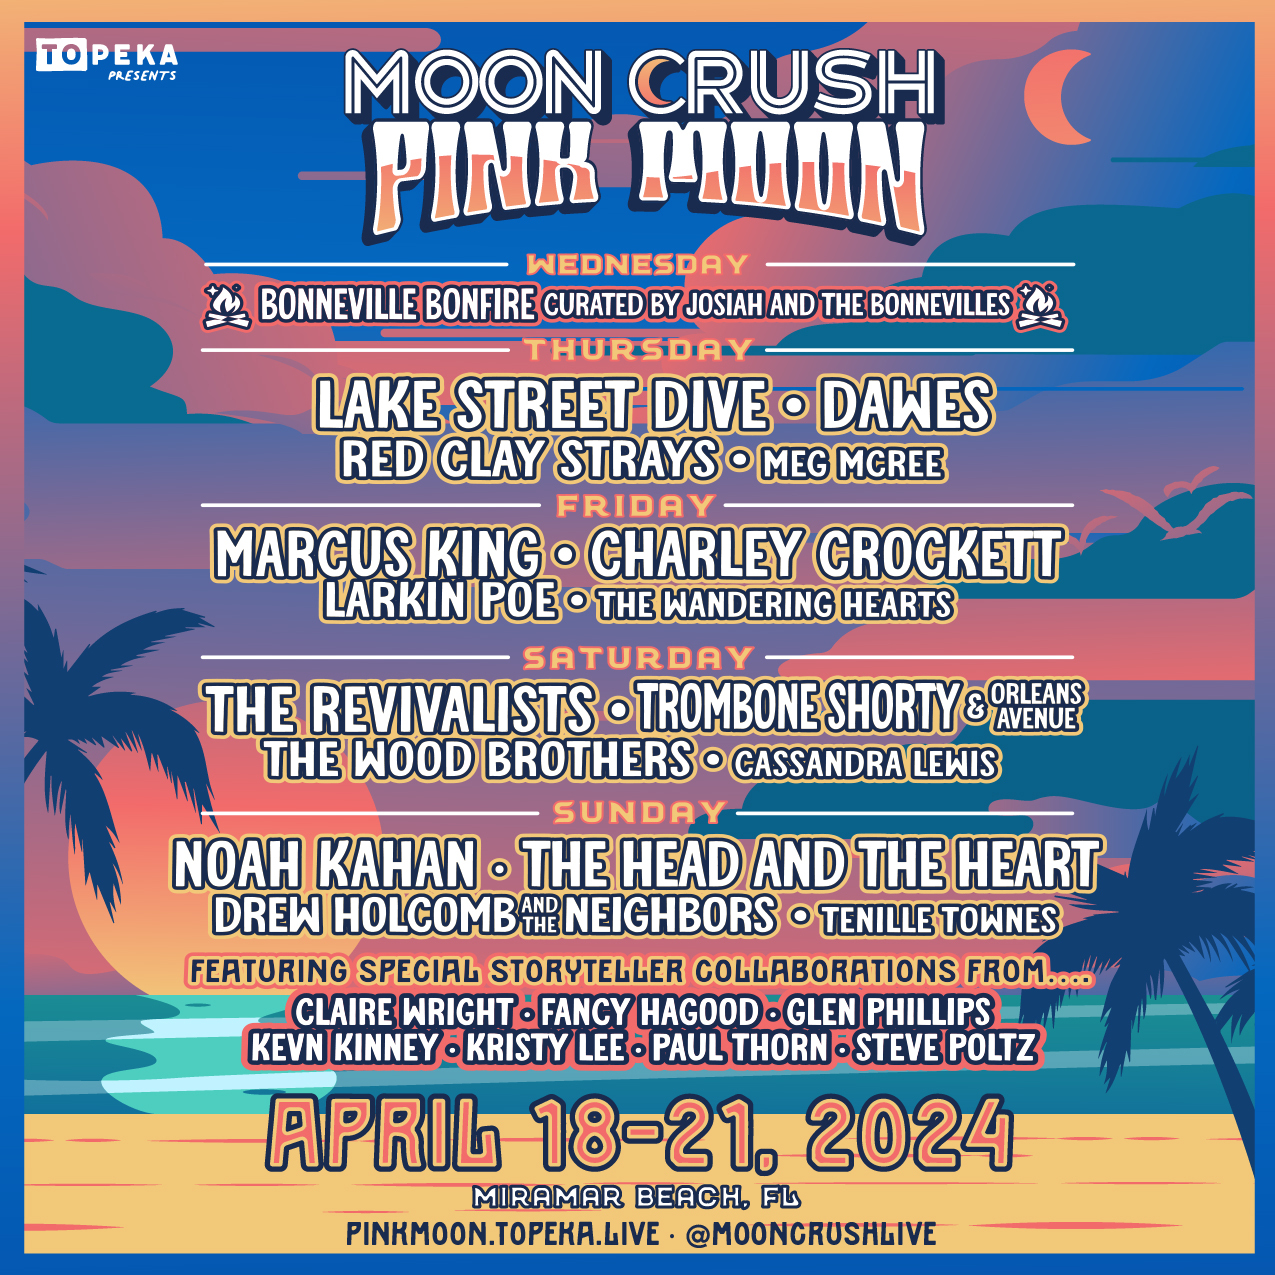 Moon Crush Pink Moon lineup poster